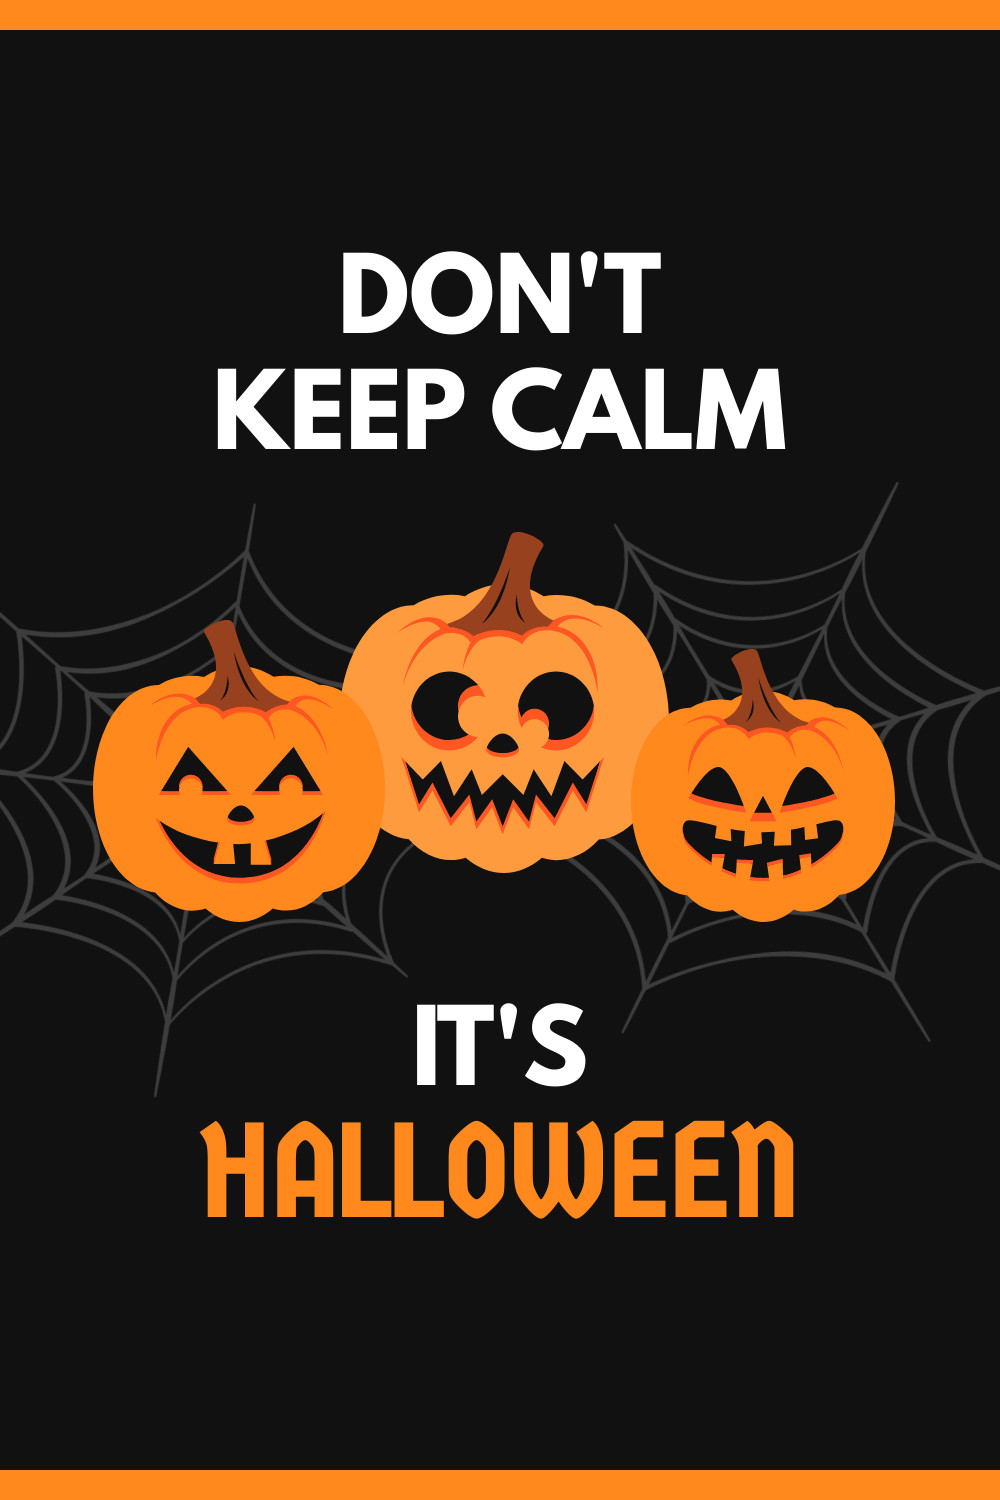 Don't Keep Calm Halloween  Facebook Cover 820x360